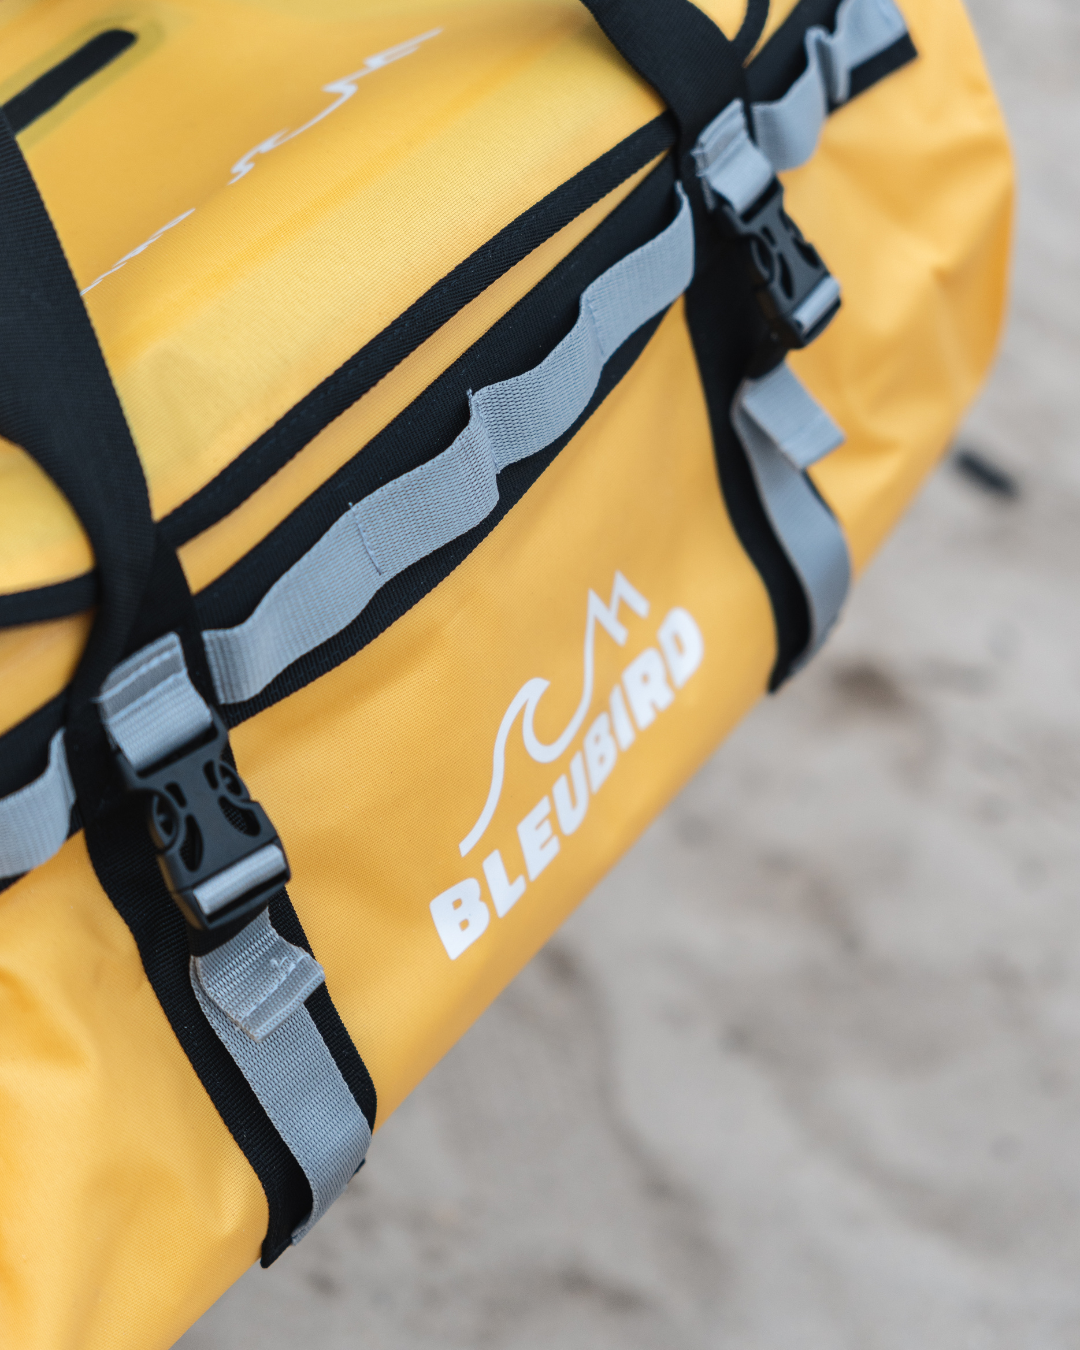 Waterproof Duffle Bag 55L - Yellow